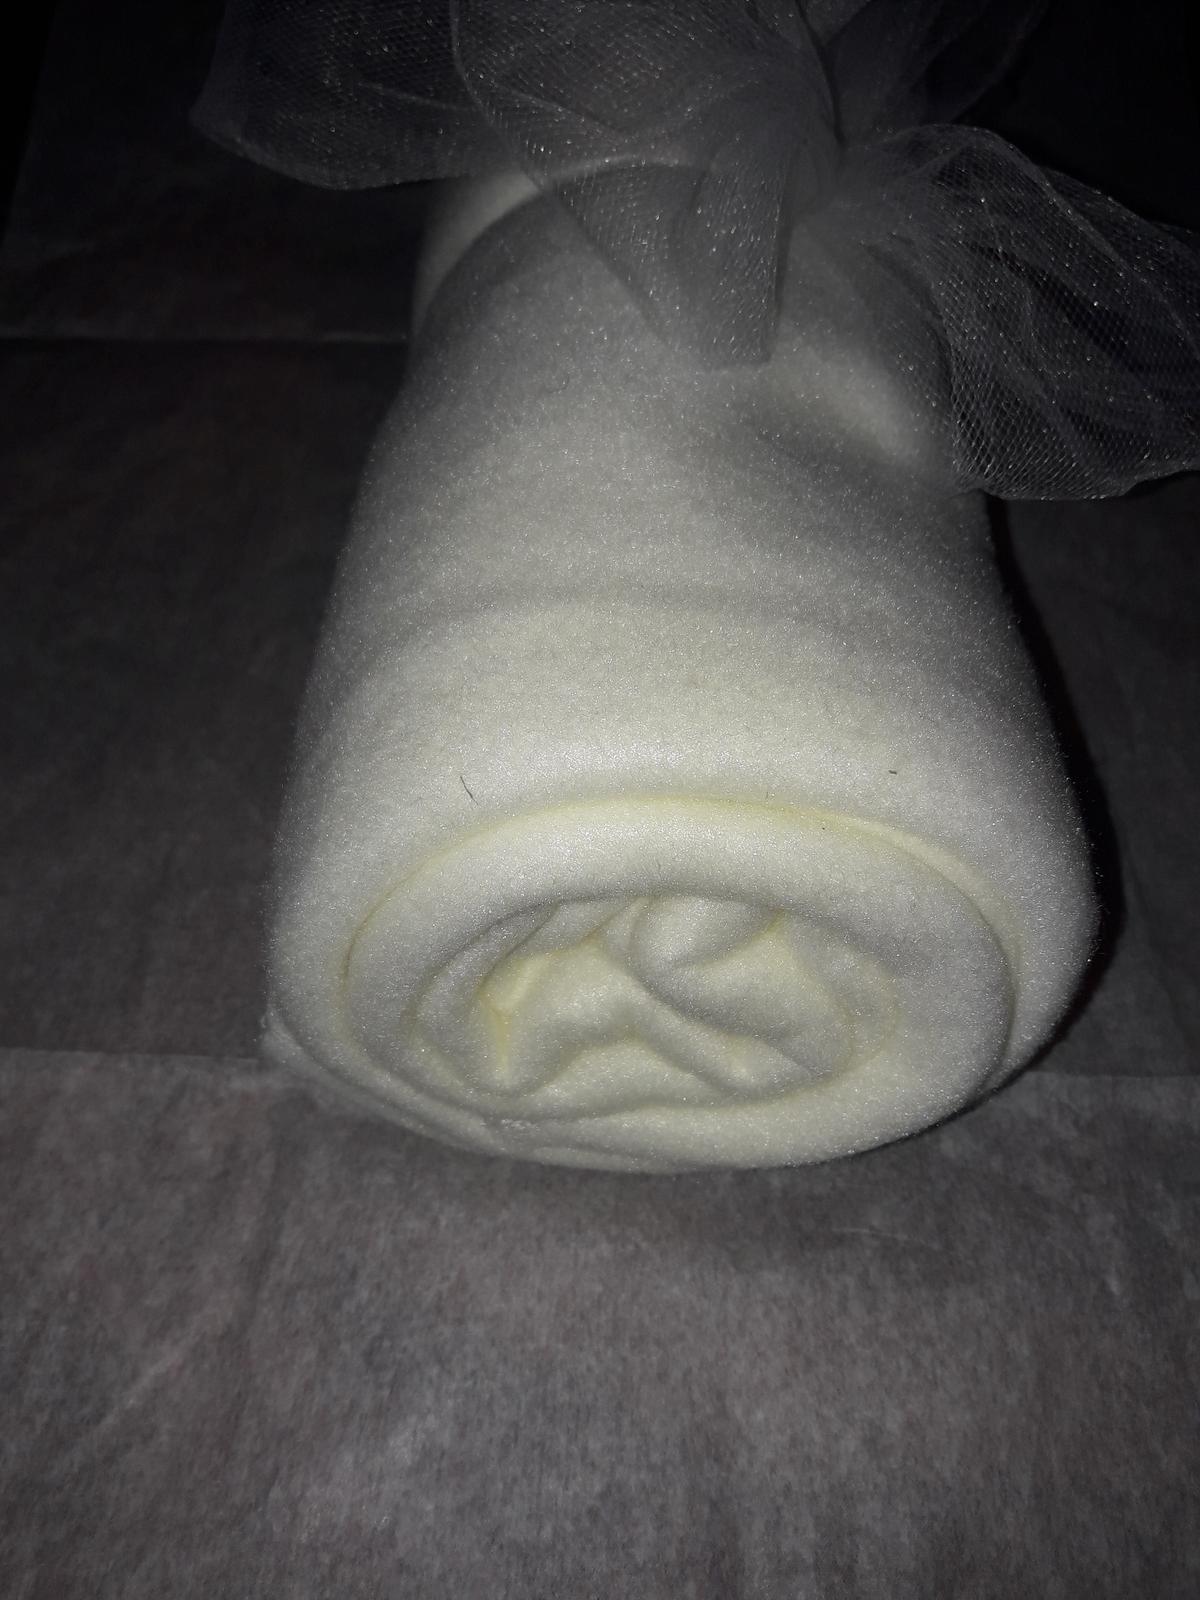 Flaušová deka - Obrázek č. 1